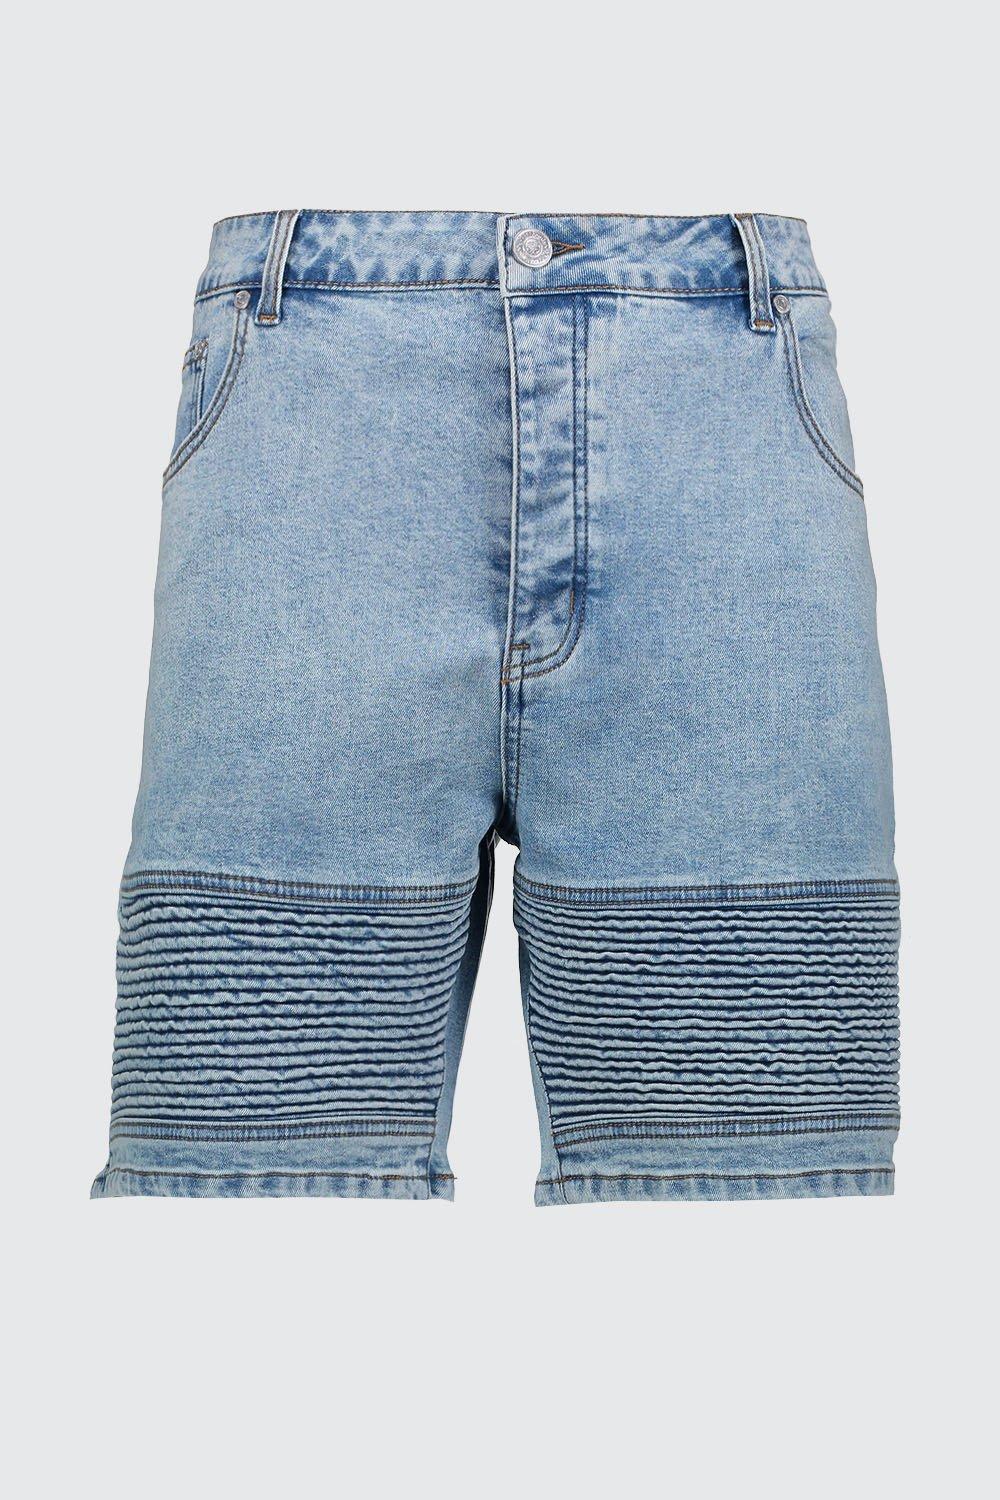 biker jean shorts